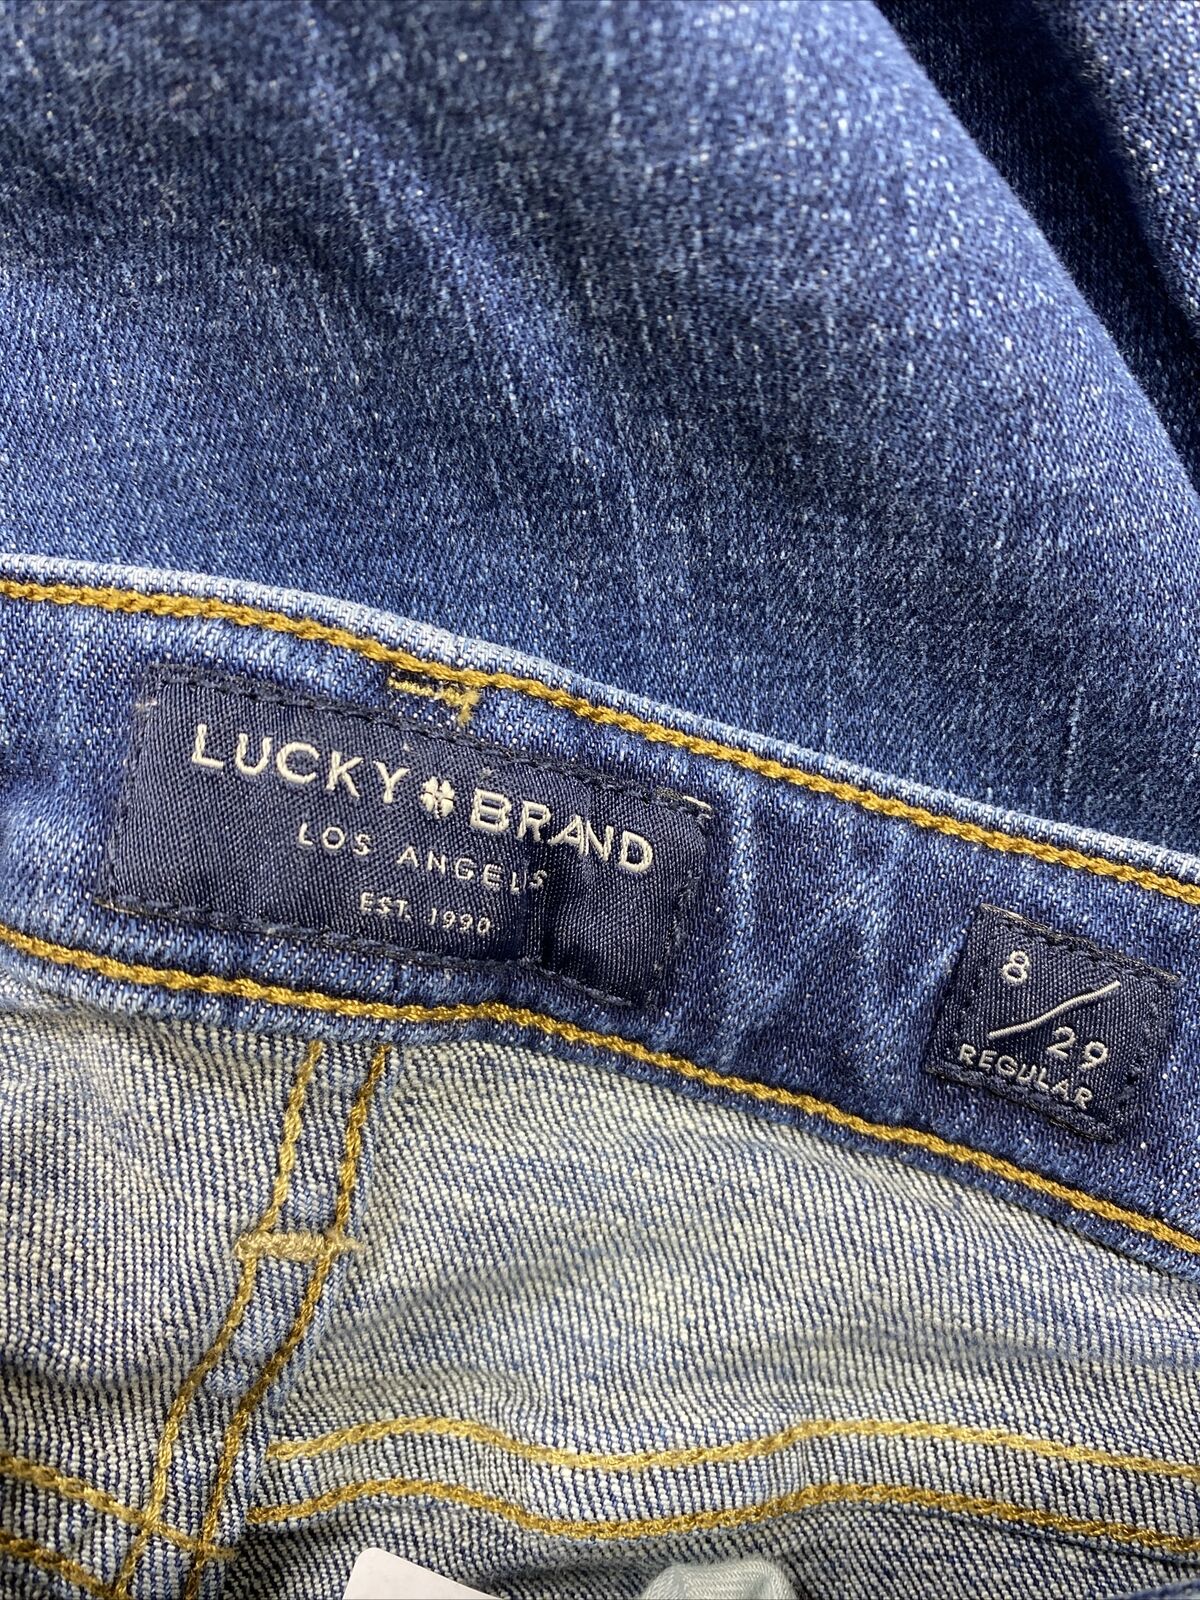 Lucky Brand Women's Medium Wash Lolita Skinny Denim Jeans - 8/29